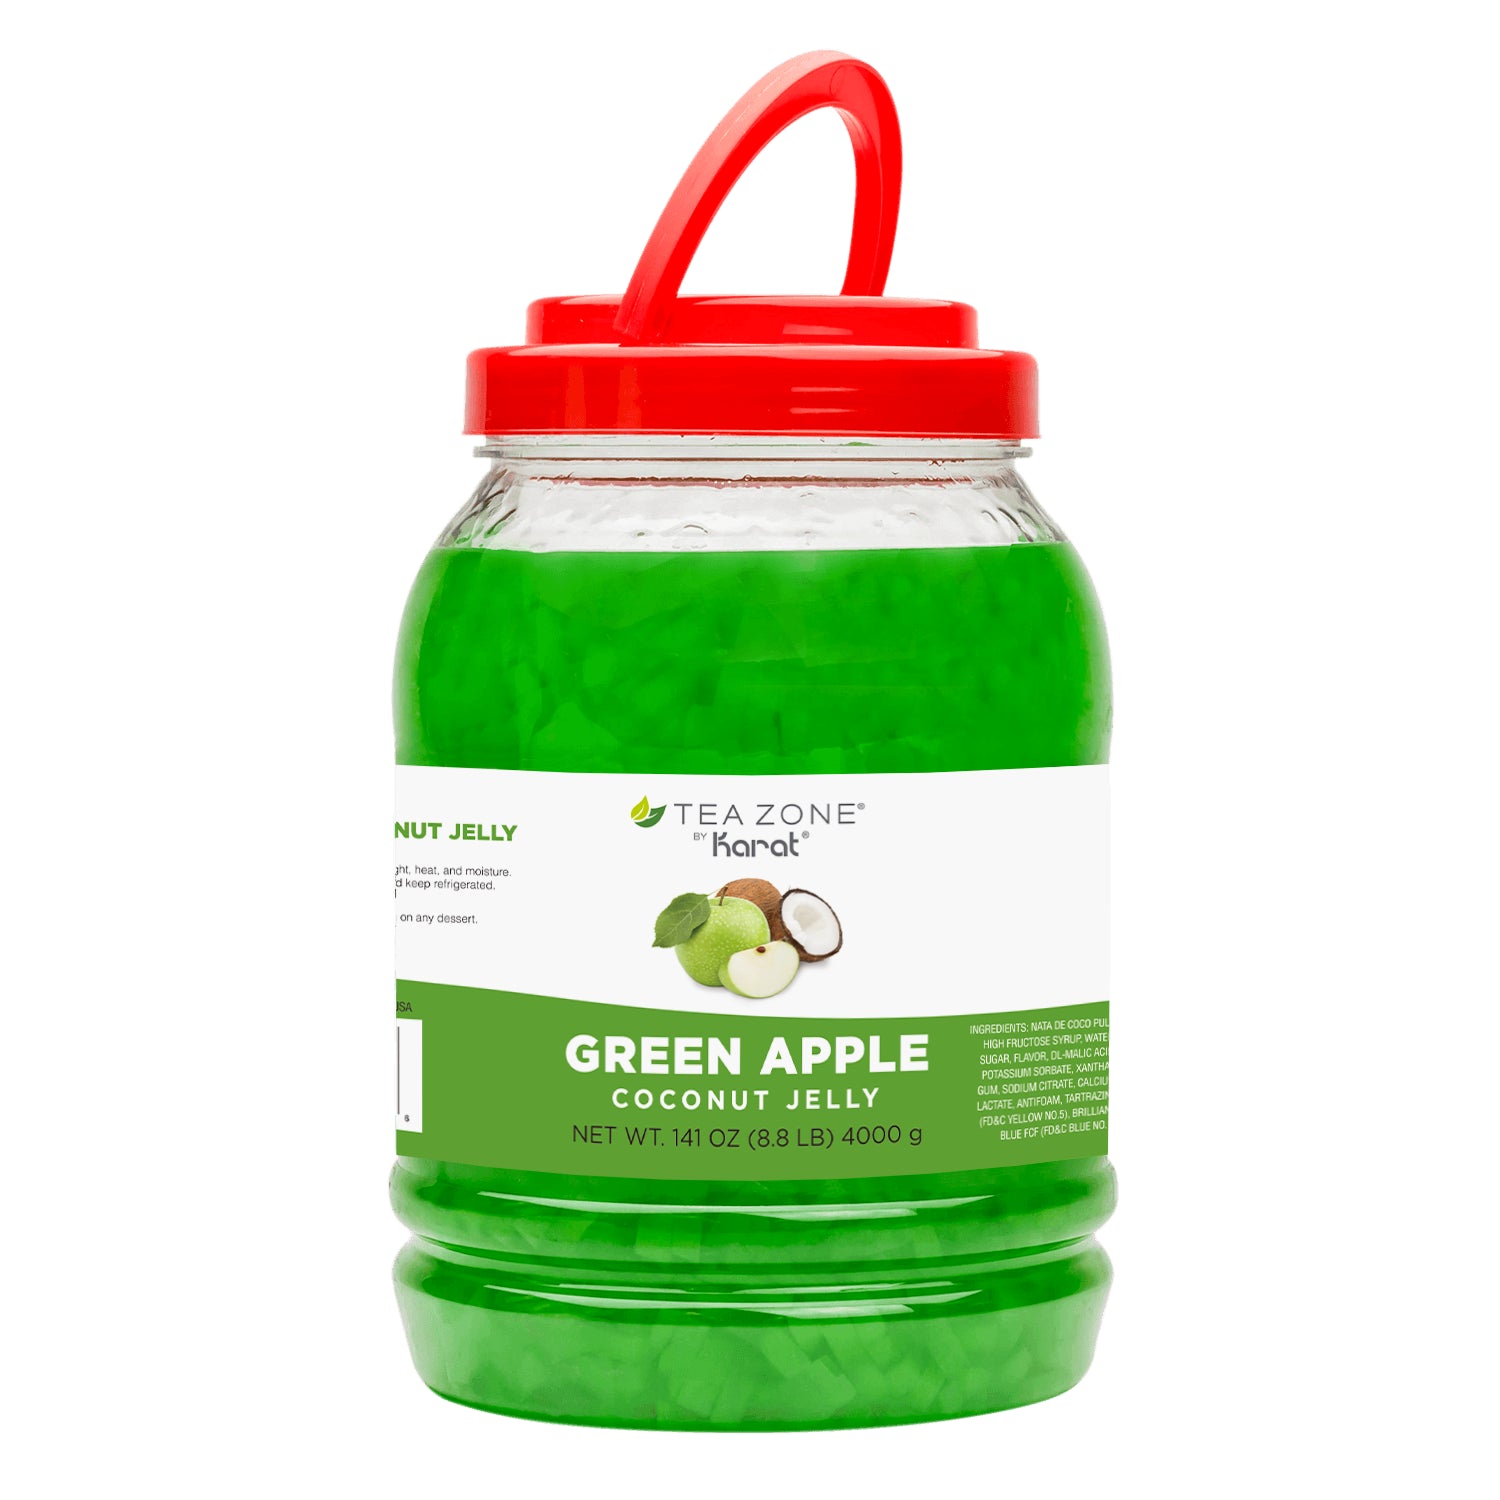 Tea Zone Green Apple Coconut Jelly in 8.8 lb jar